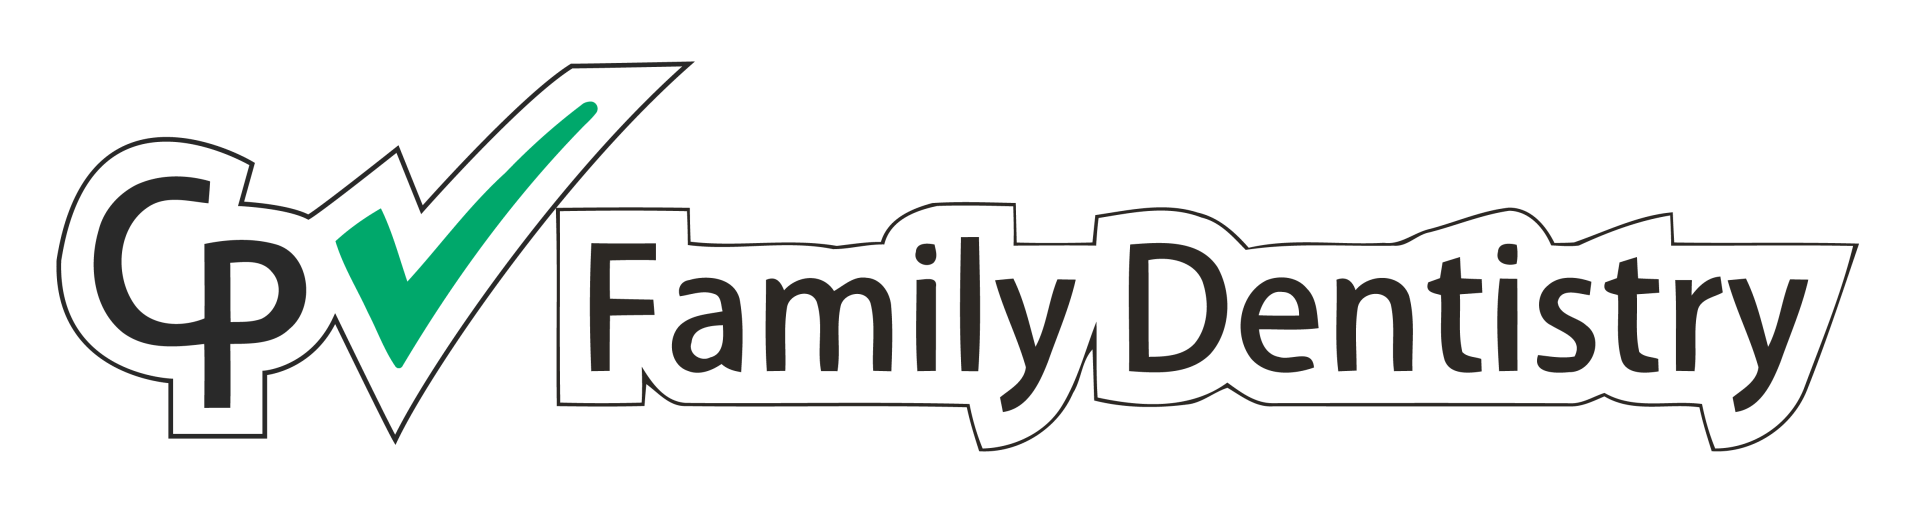 CP Family Dentistry Logo